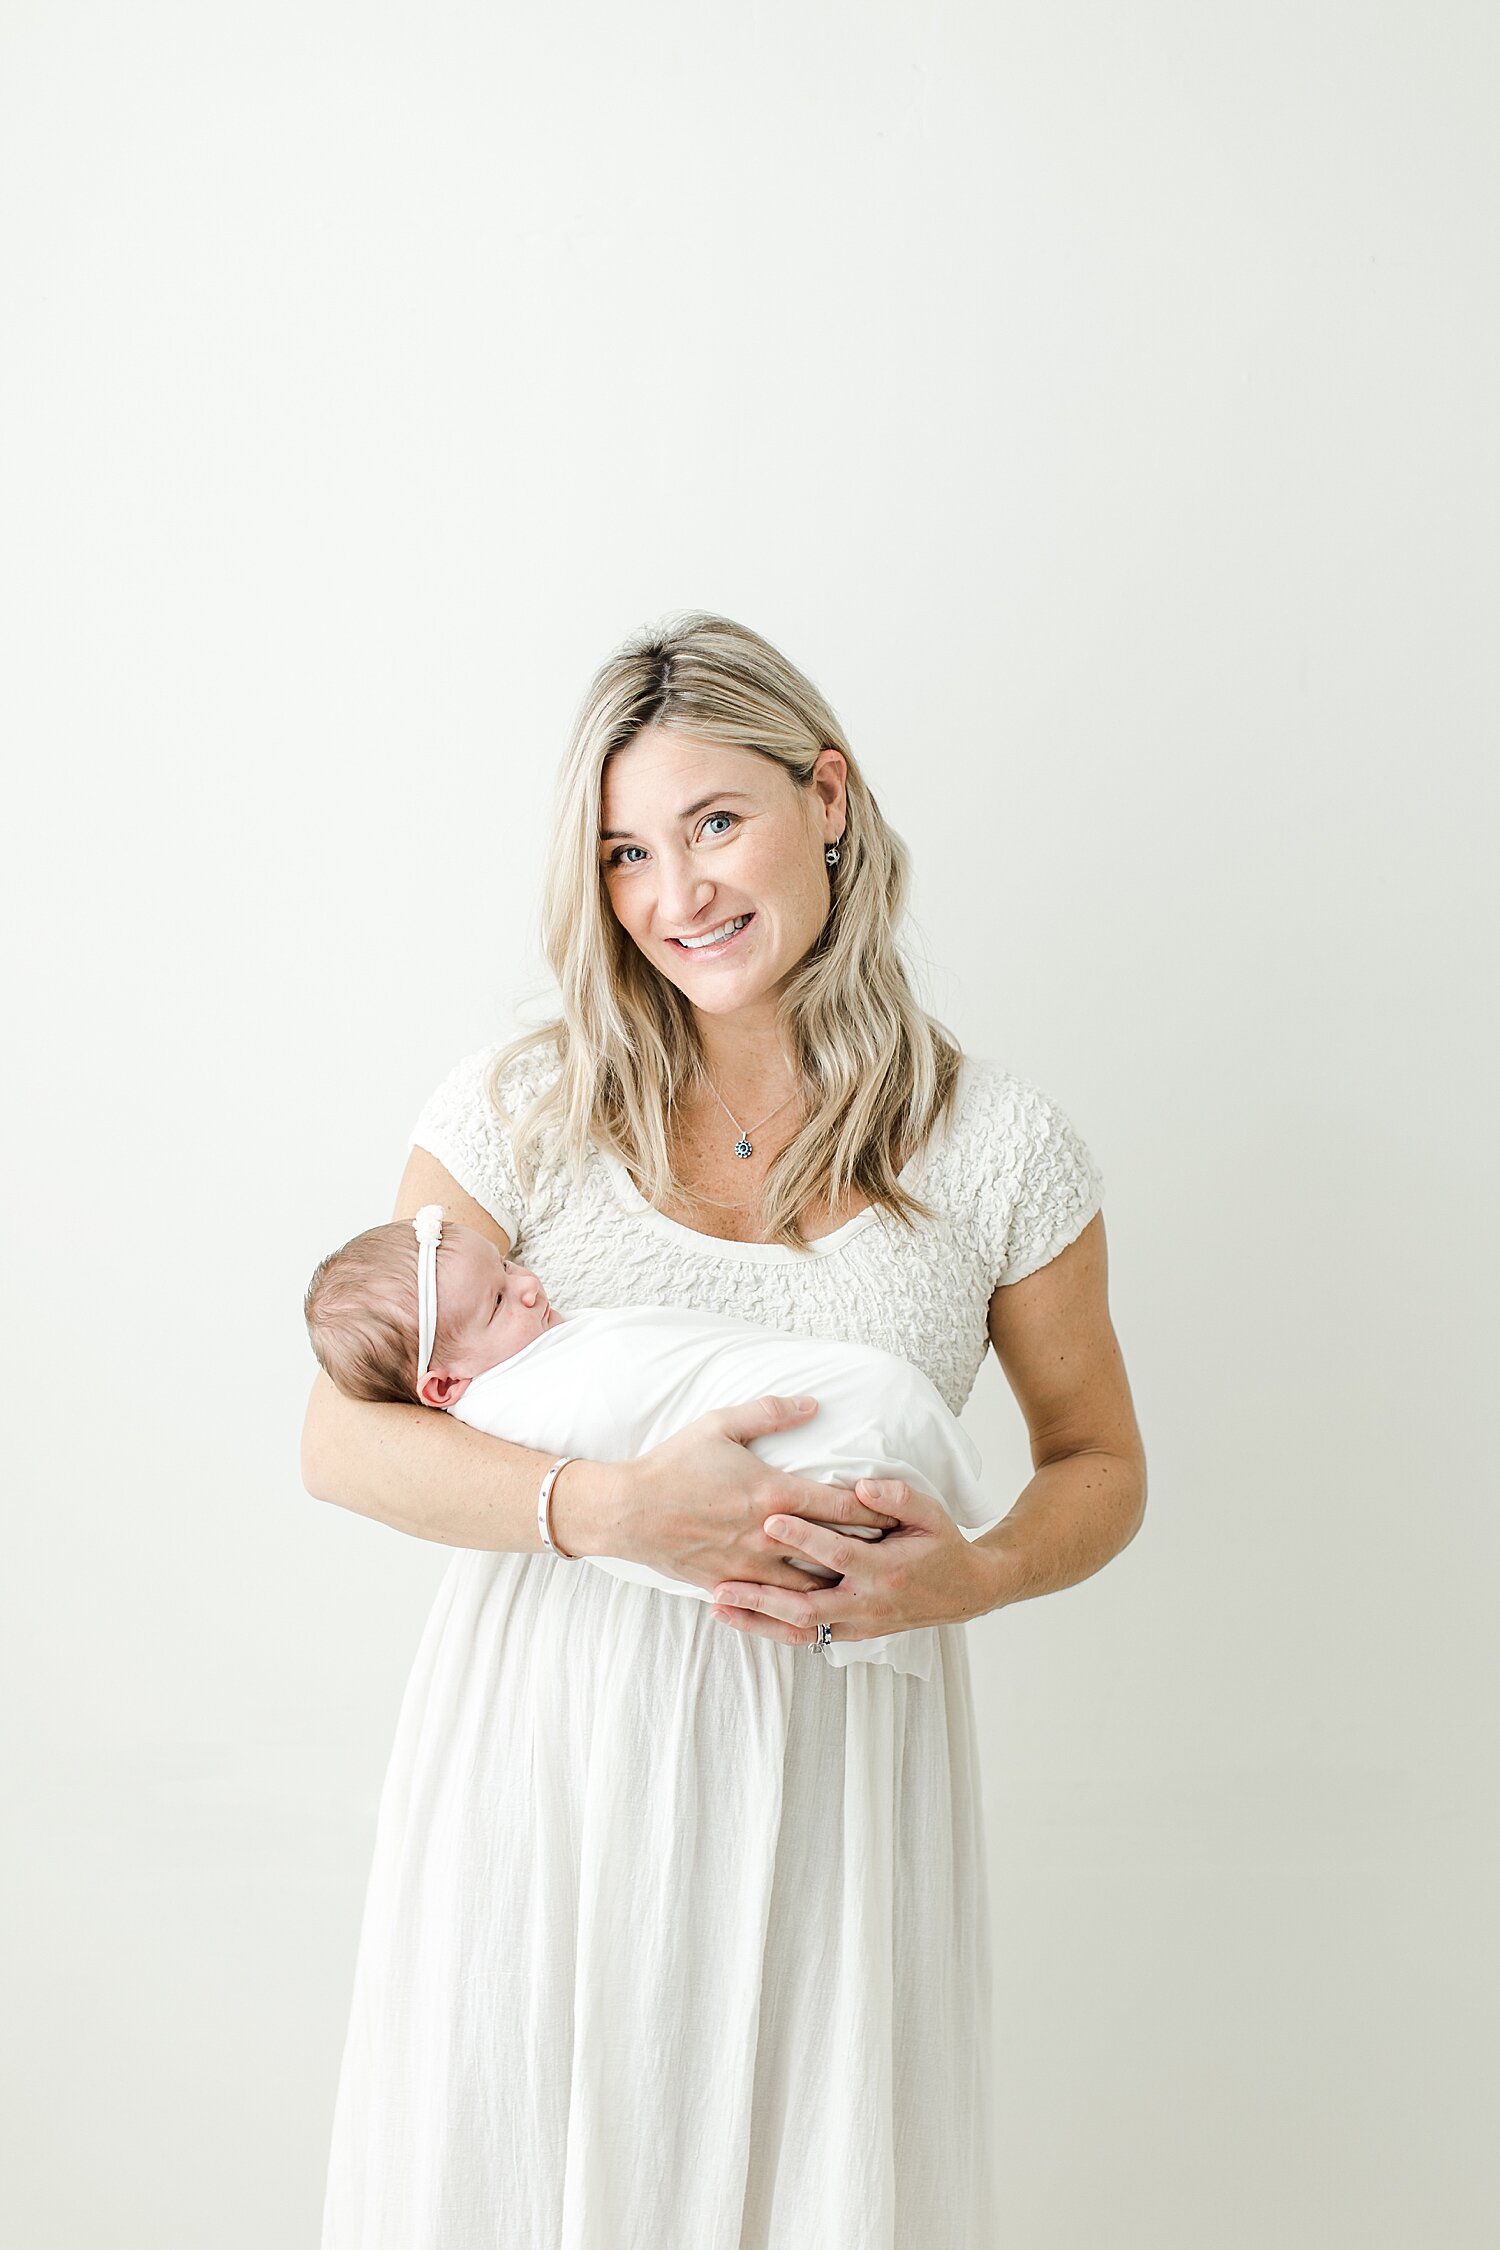 Newborn Photography in CT | Kristin Wood Photography